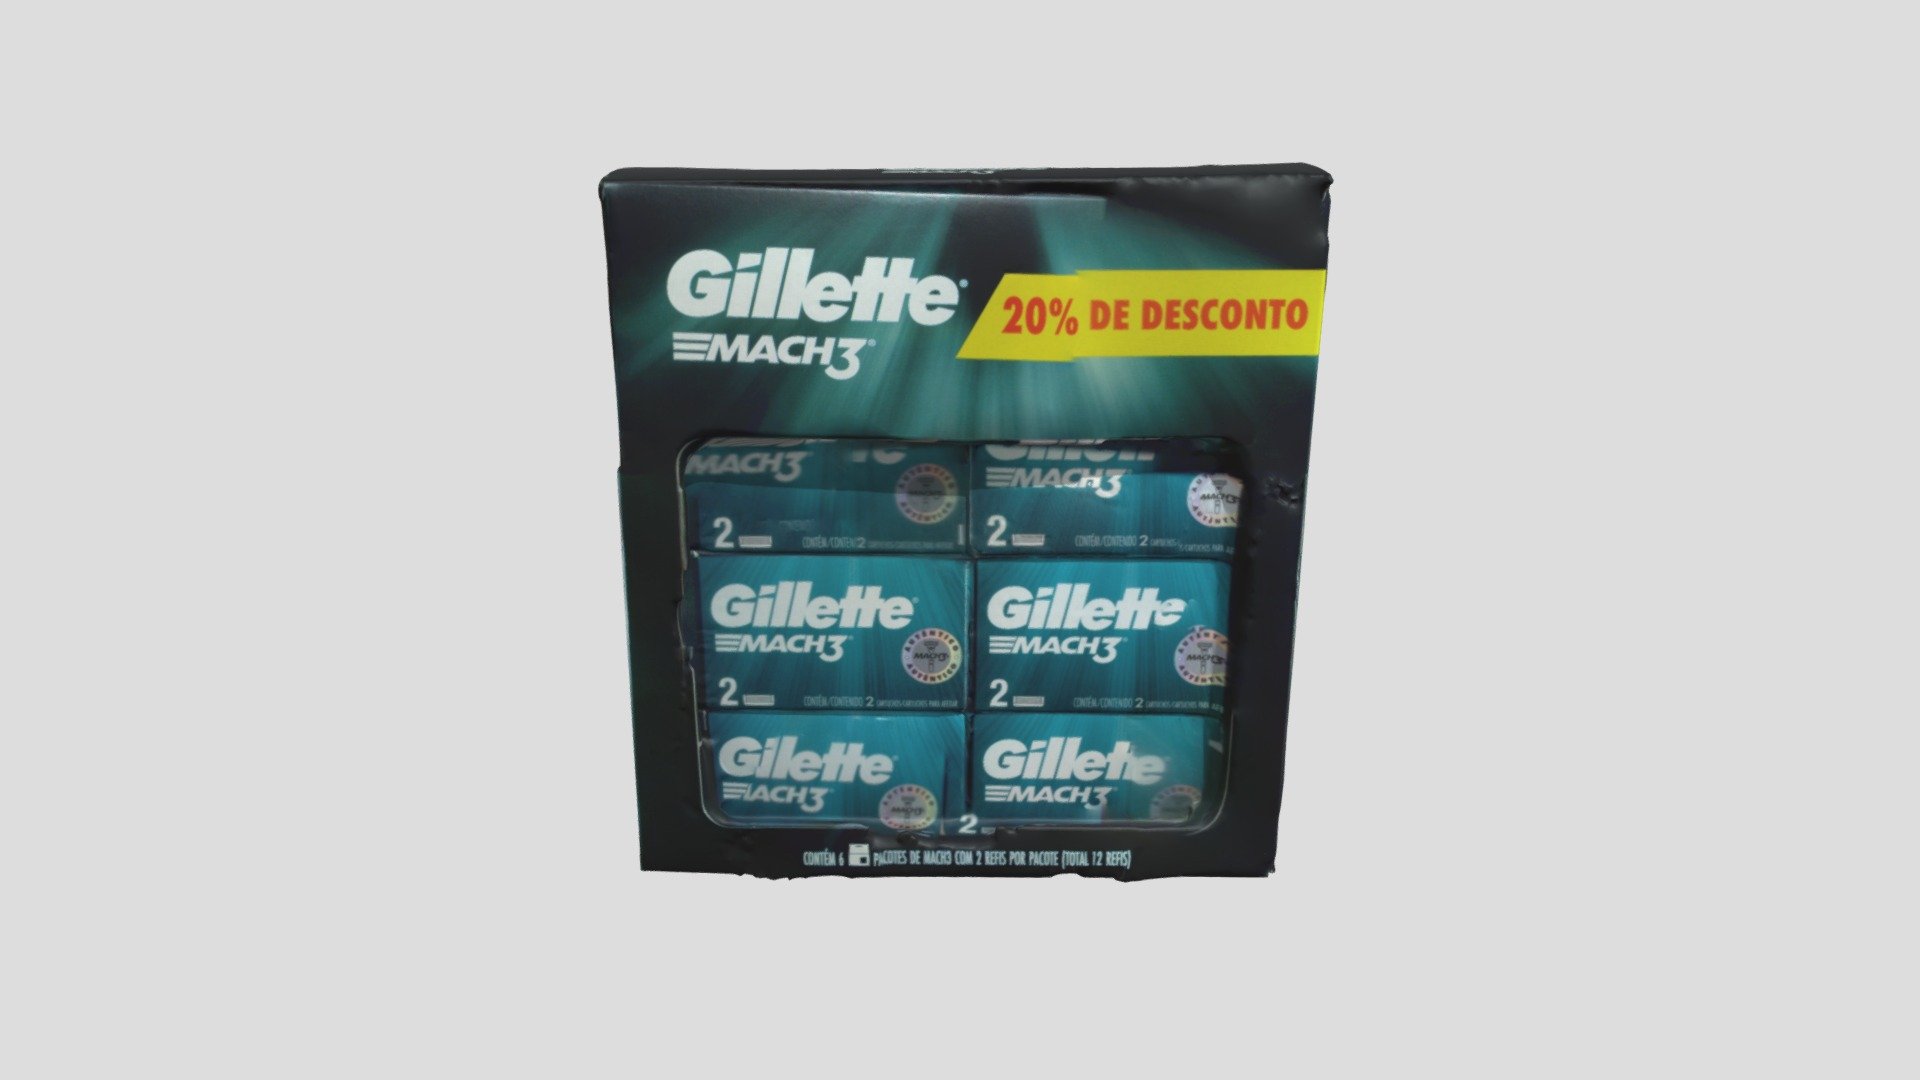 PROCTER - (H) Gillette mach3 6 pacotes - 3D model by 42LabsCS 3d model